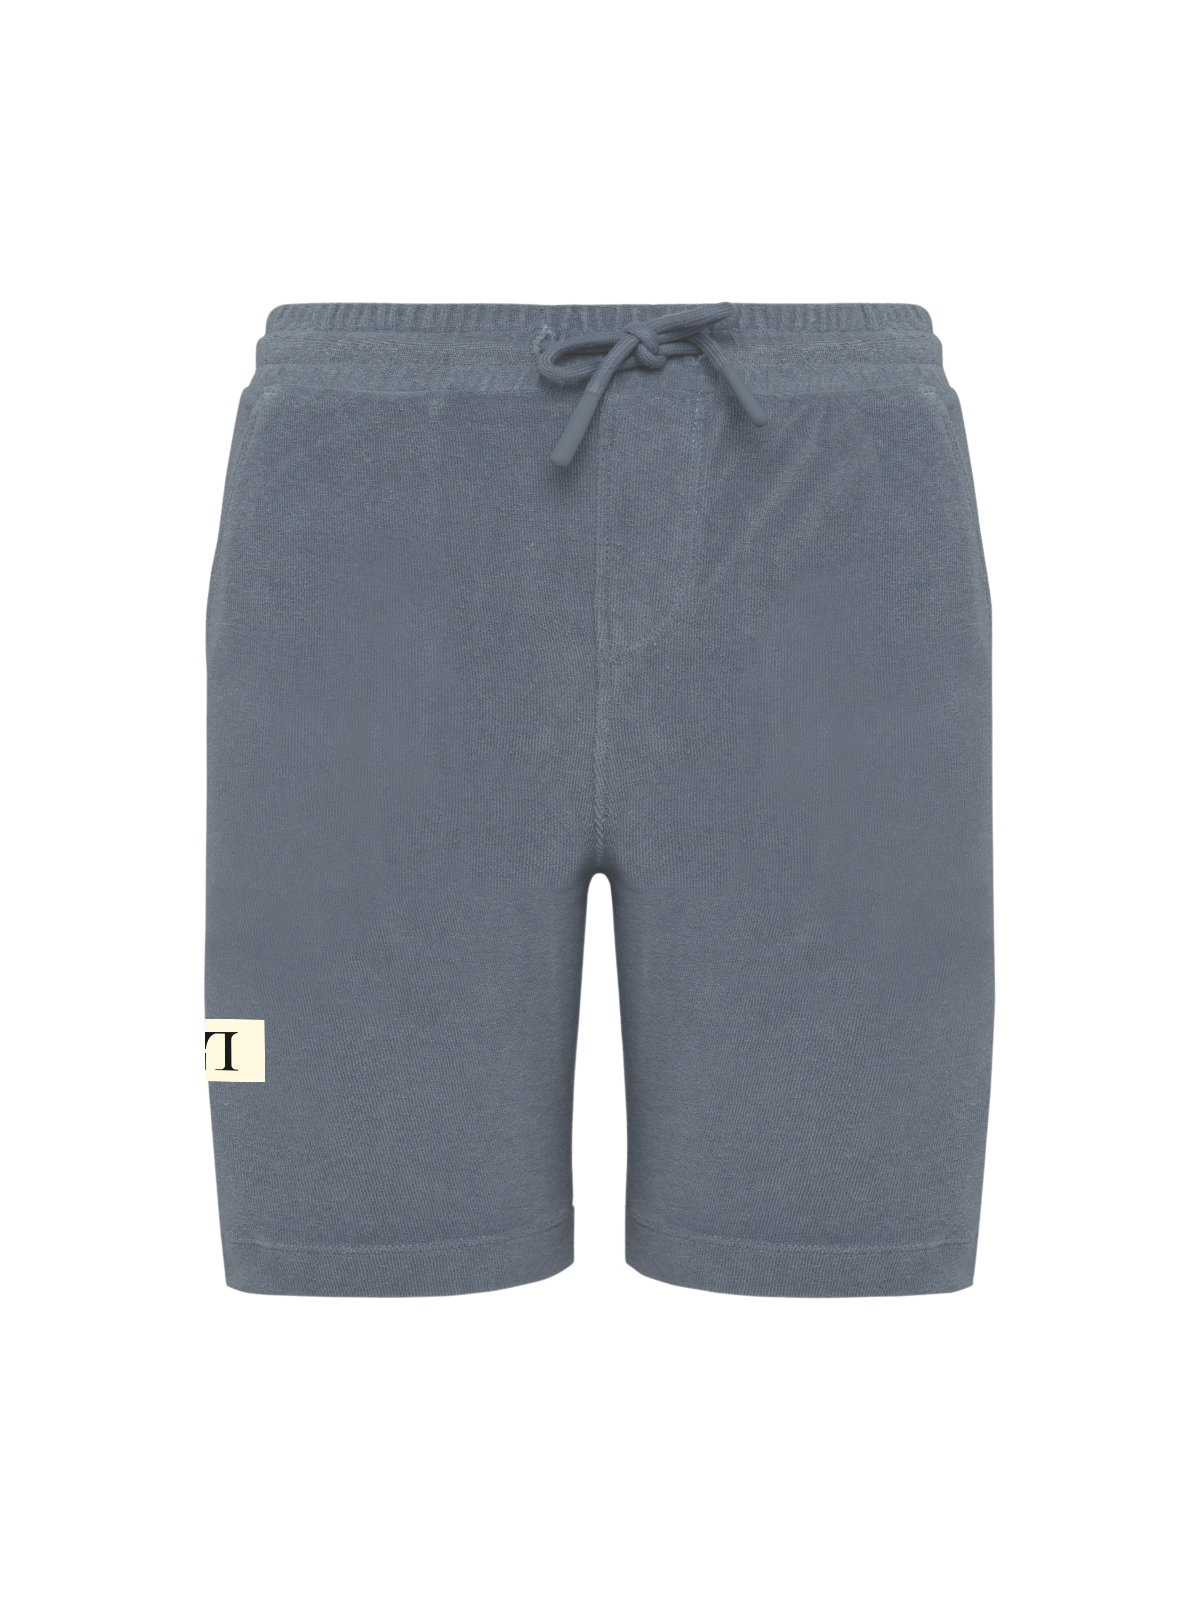 LL Terry Towel Boys Shorts mineral grey